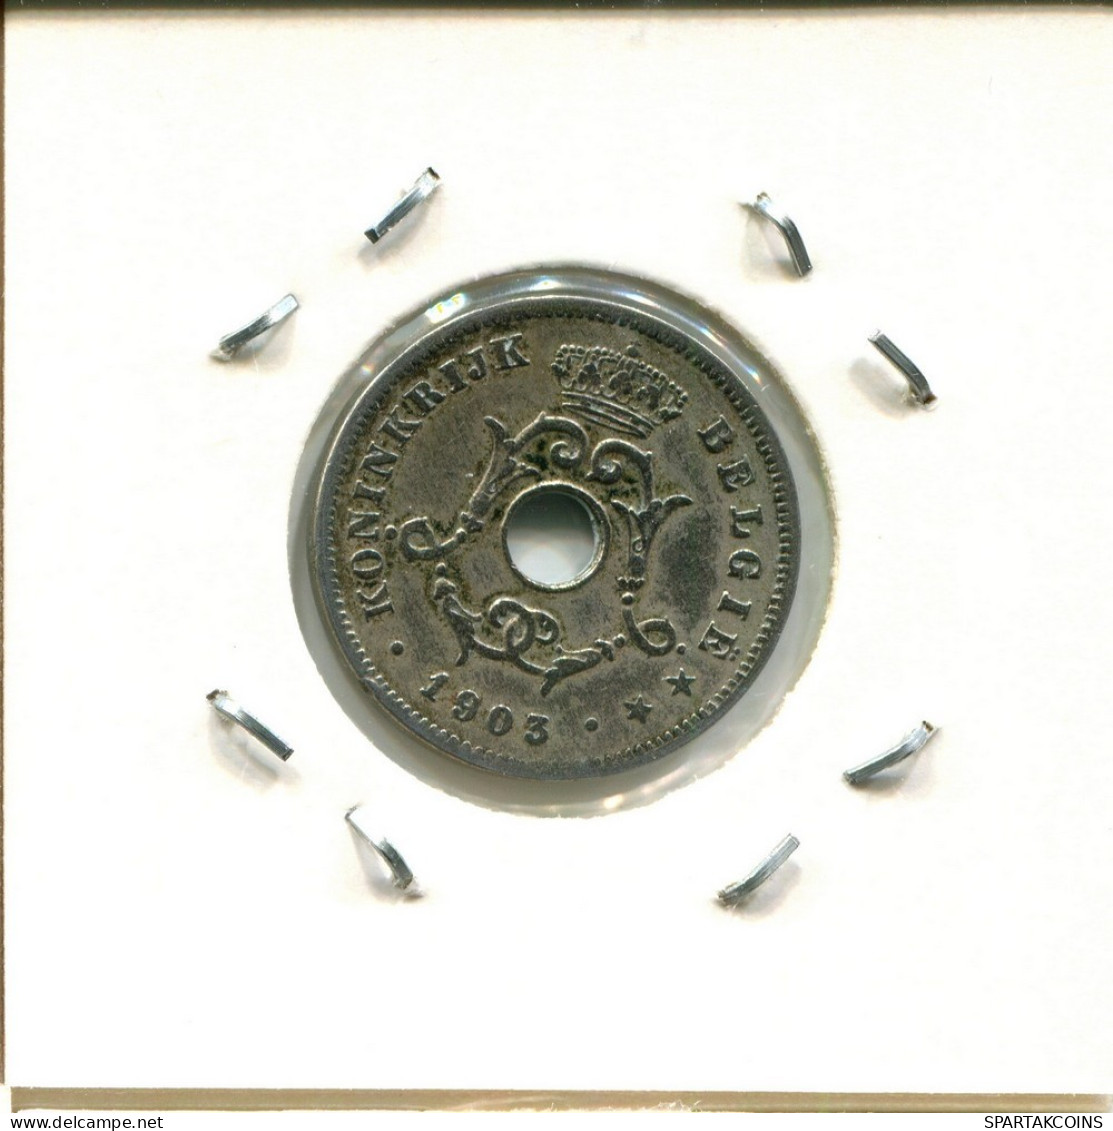 10 CENTIMES 1903 DUTCH Text BÉLGICA BELGIUM Moneda #BA275.E.A - 10 Cents